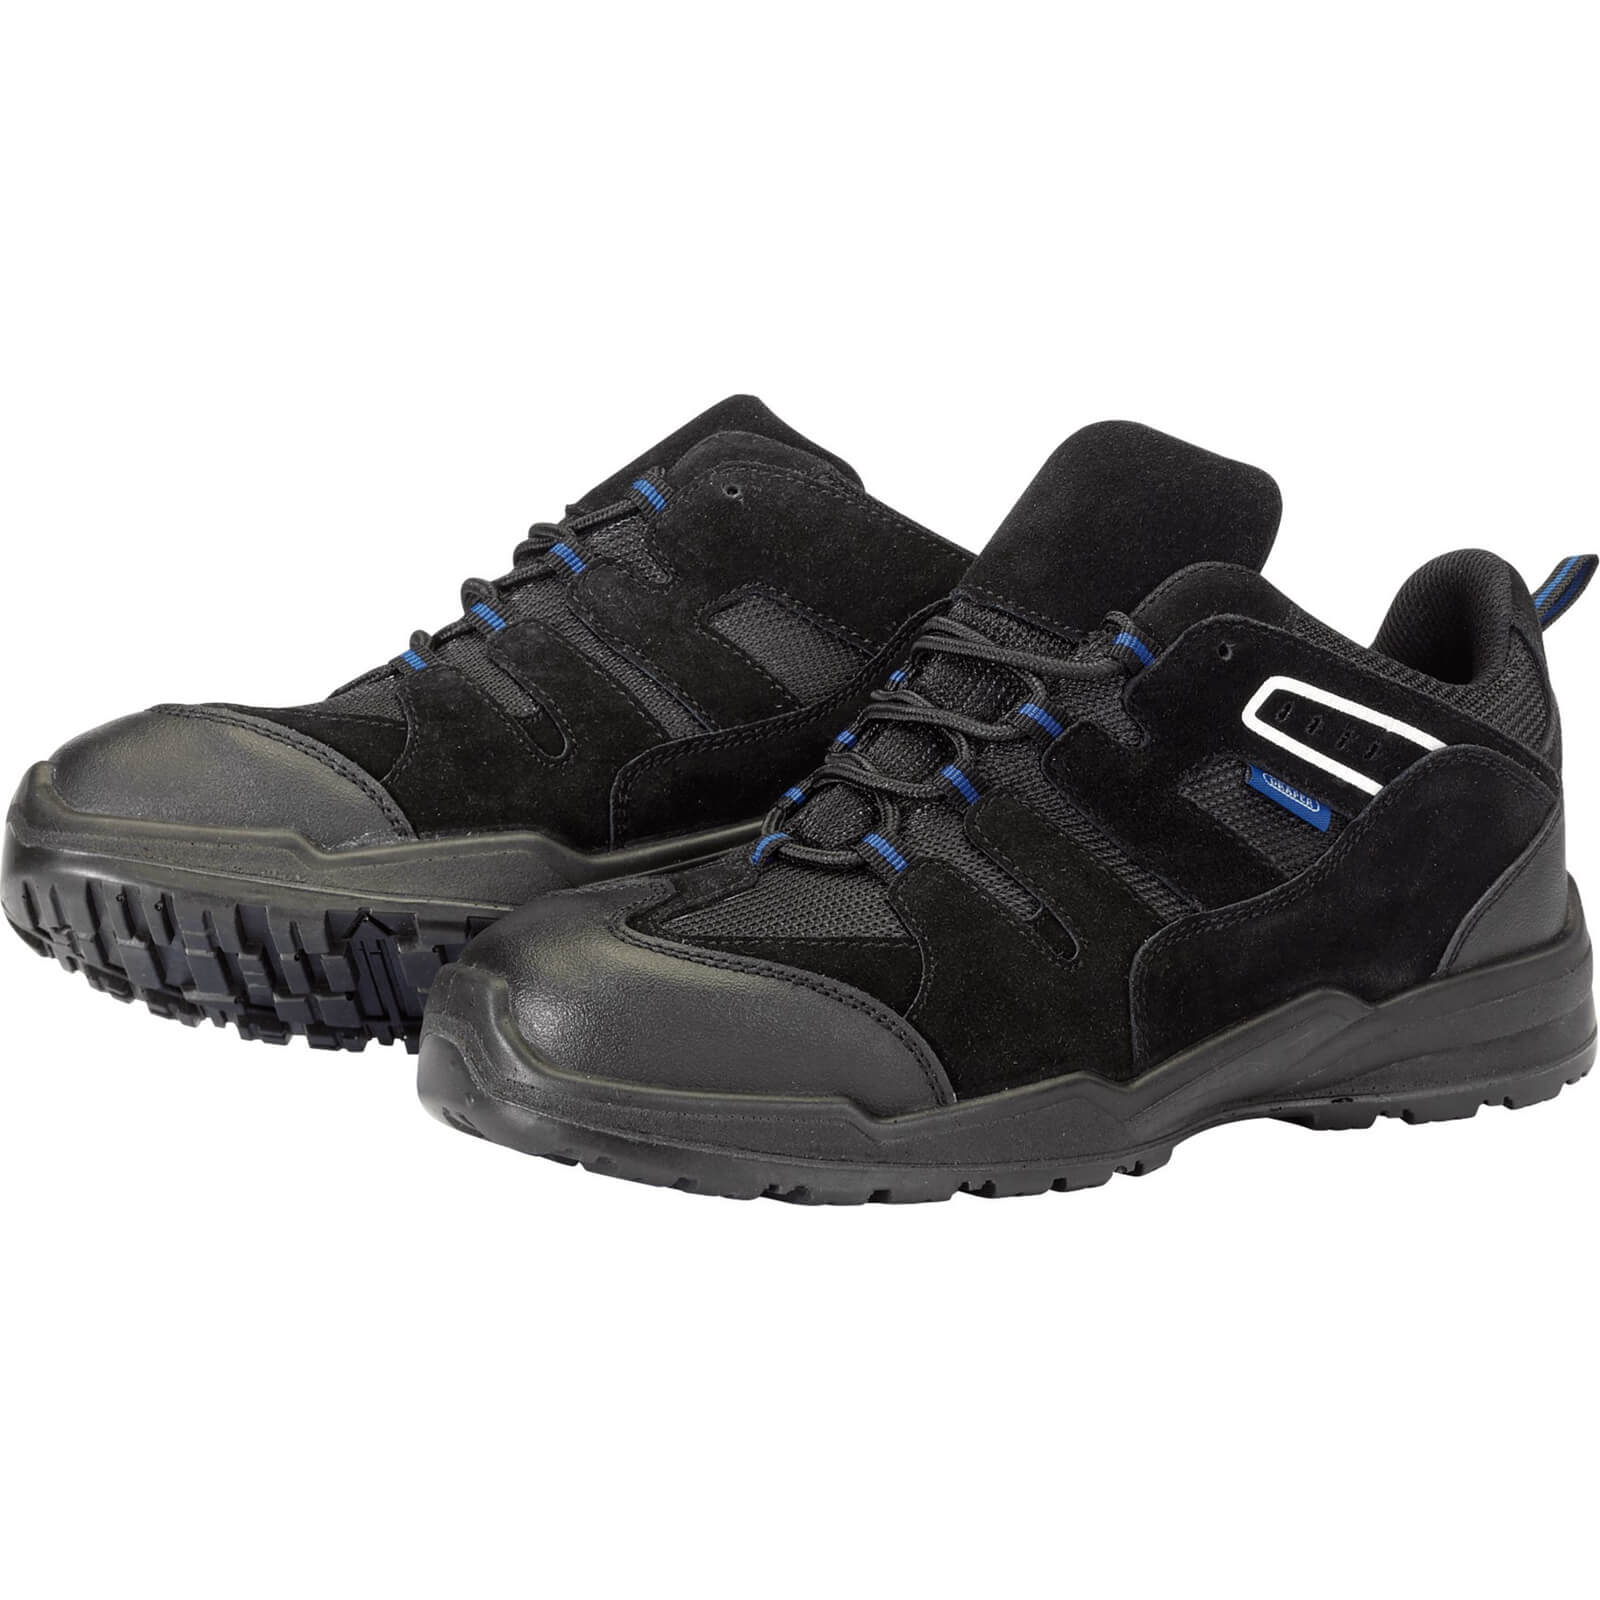 Image of Draper Trainer Style Safety Shoe Black Size 5